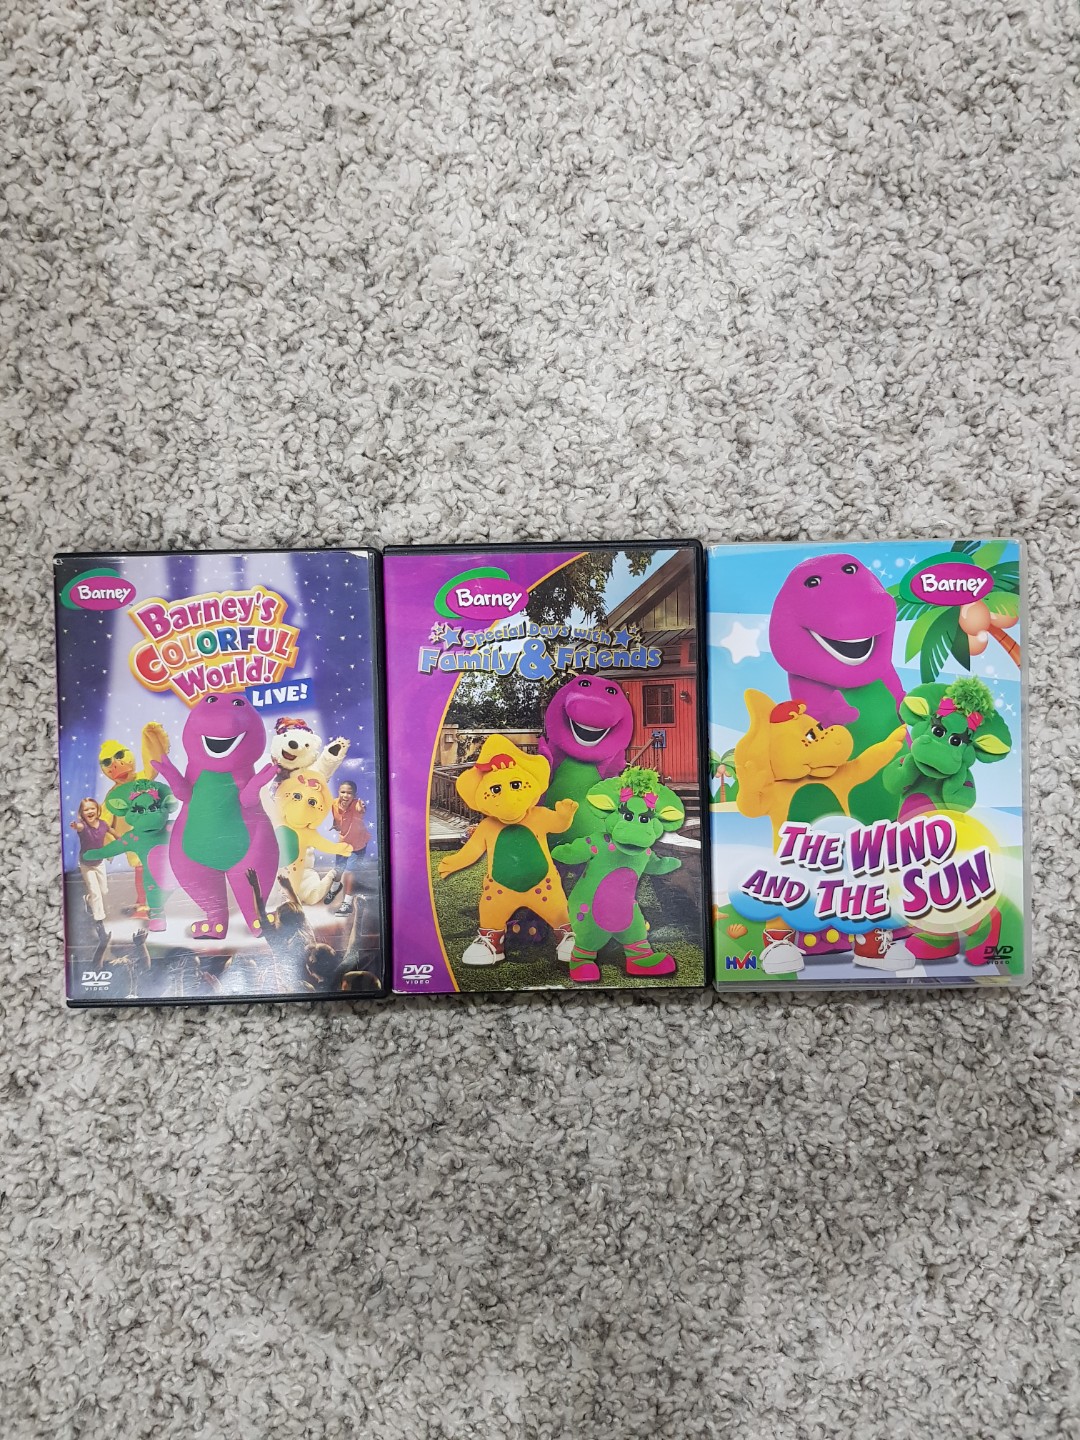 Toys R Us Barney Dvd